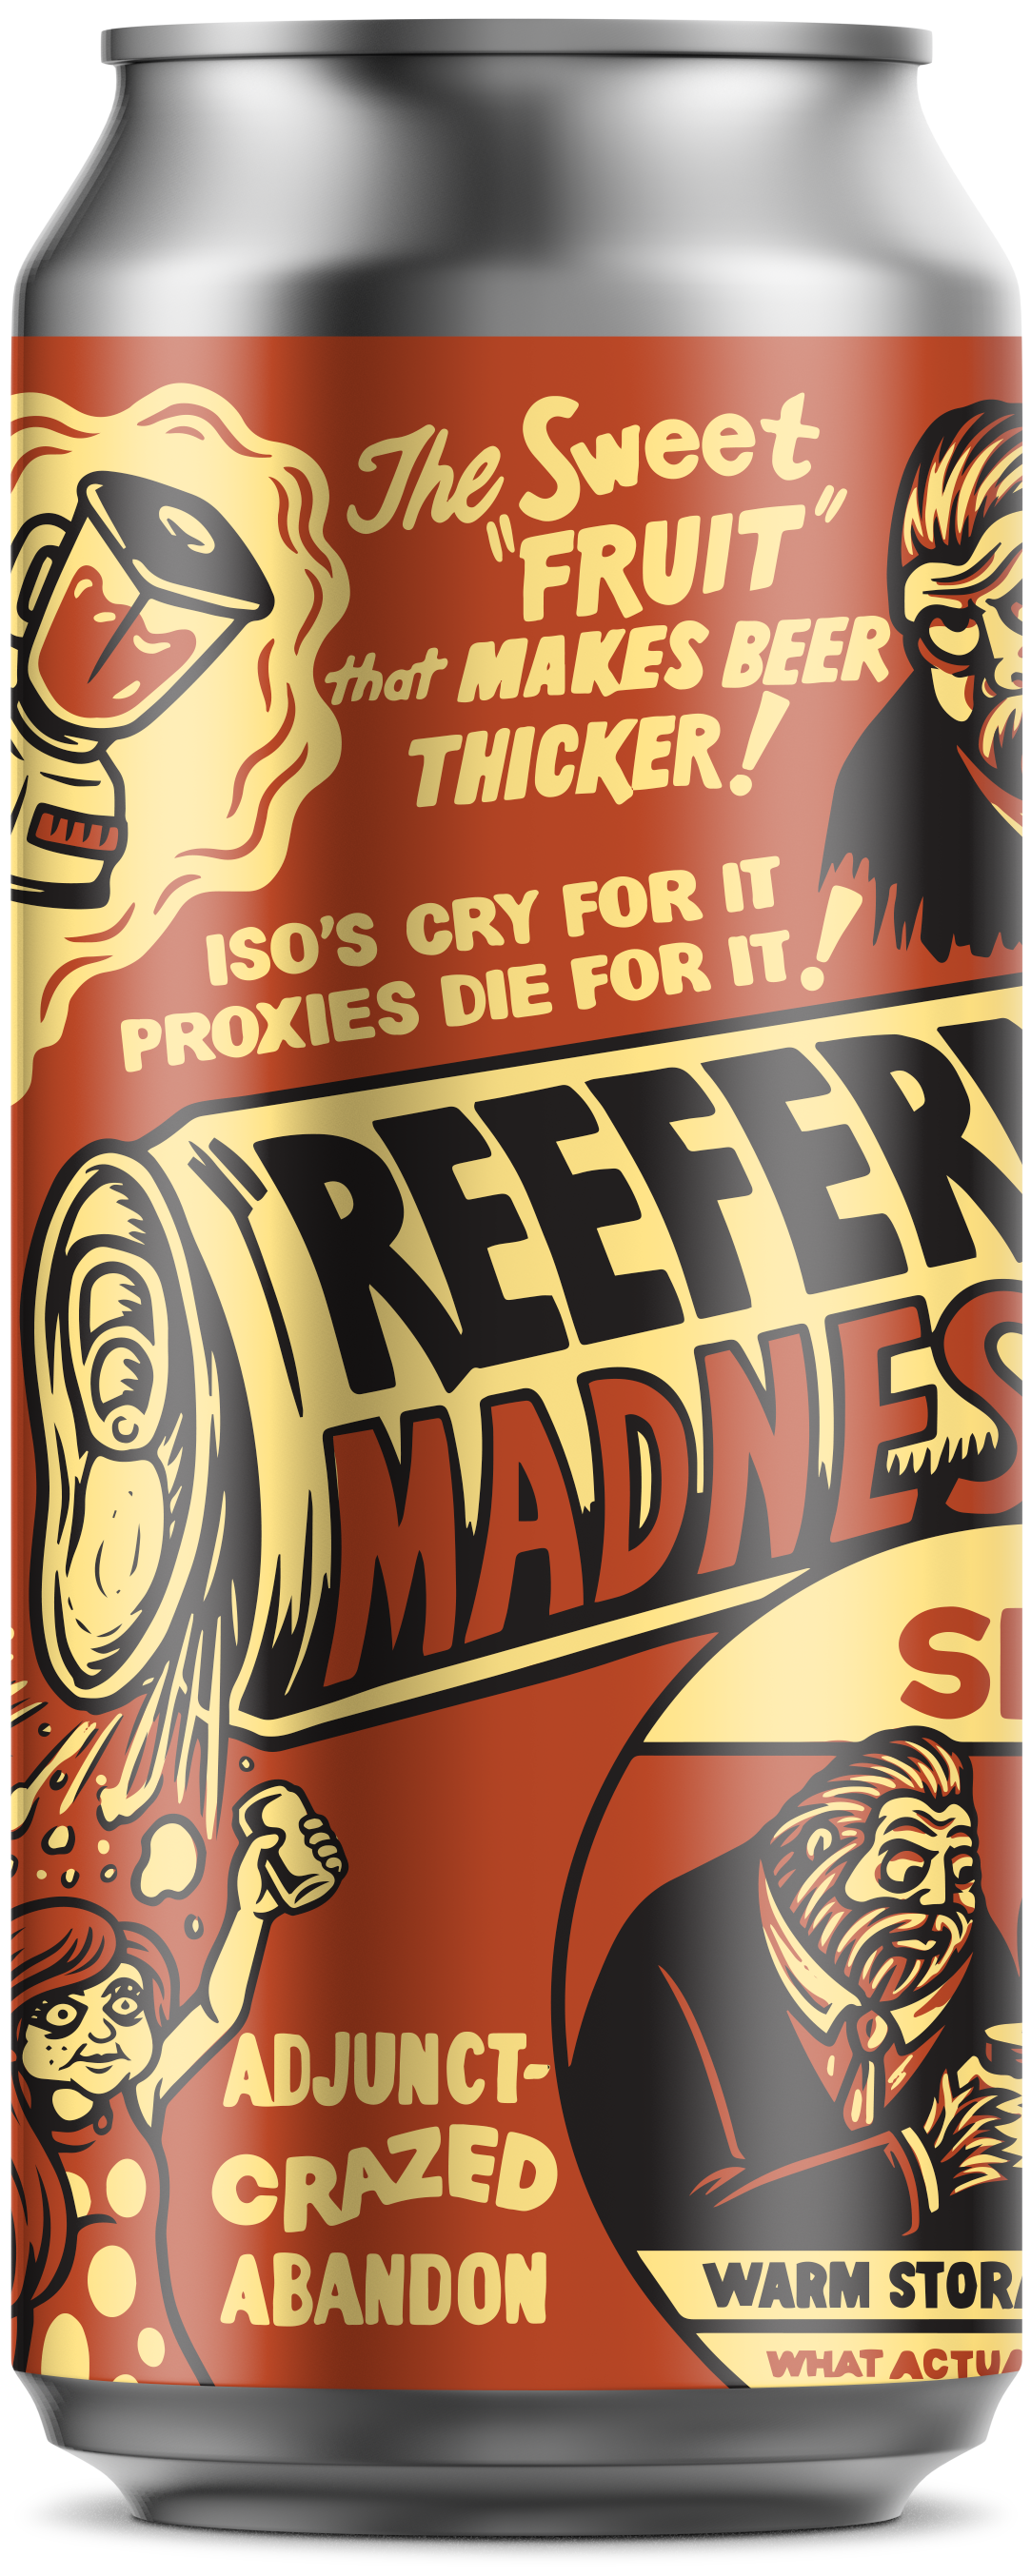 Reeferm Madness